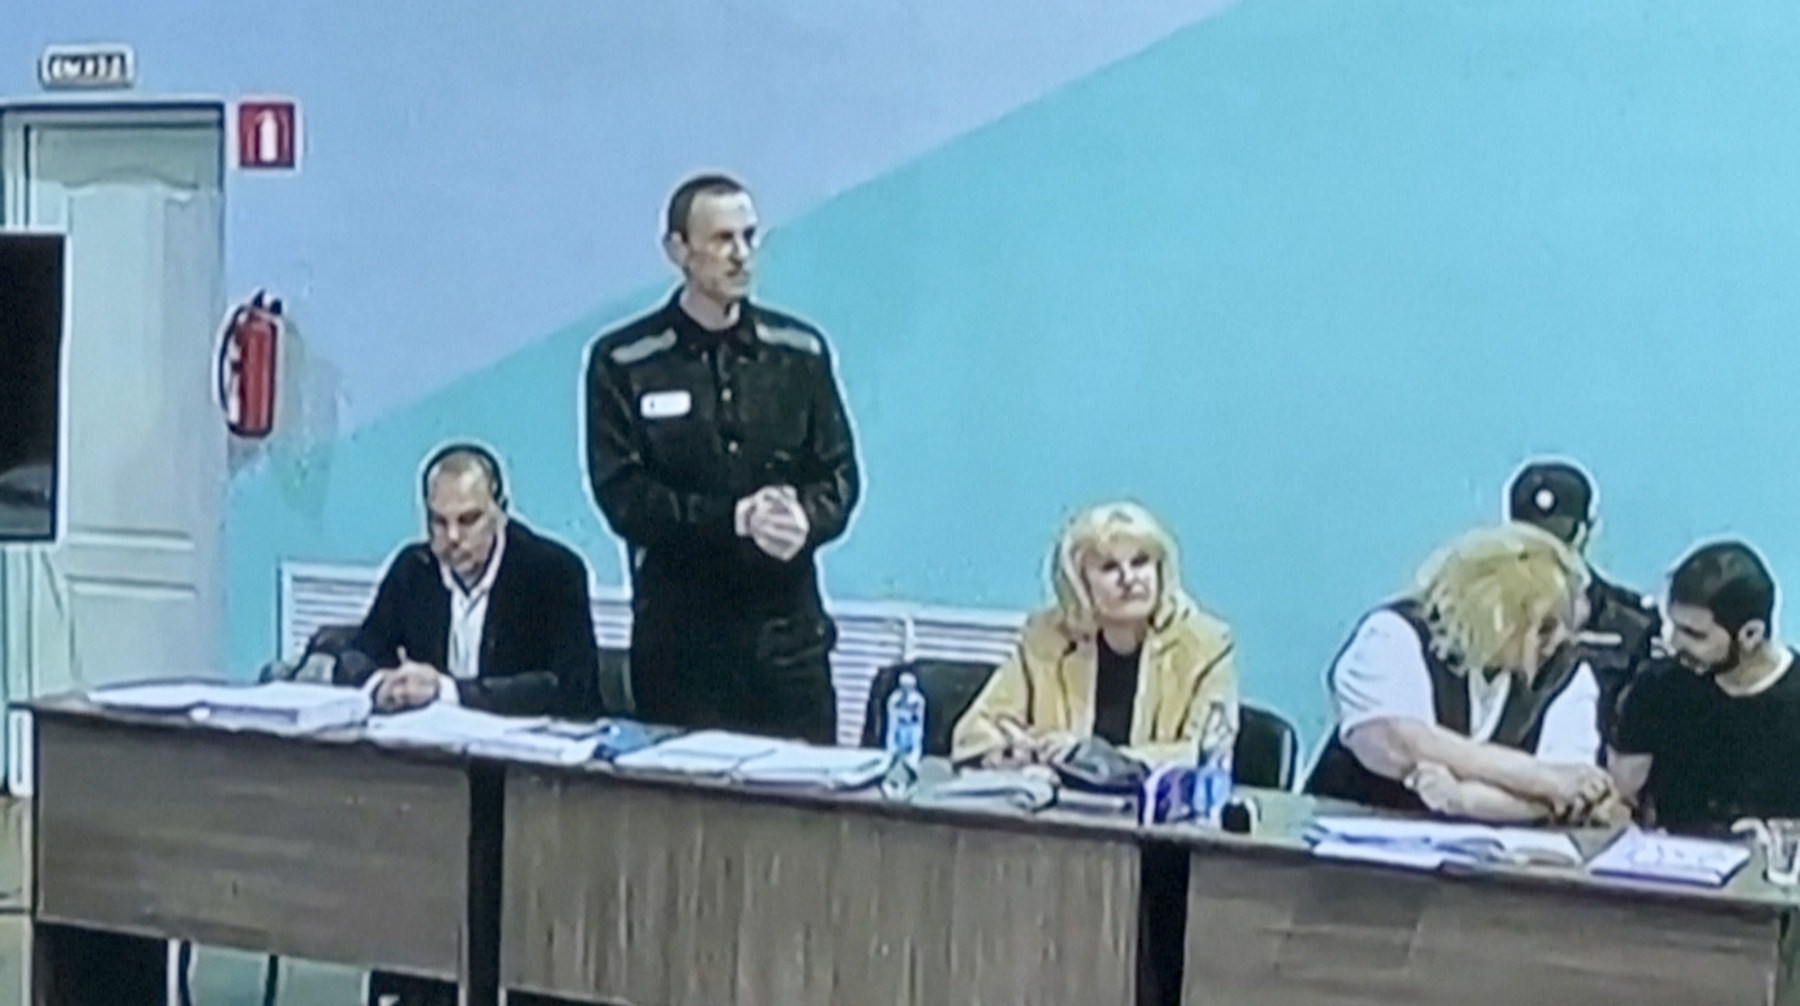 russia alexei navalny jailed extremism 19 years